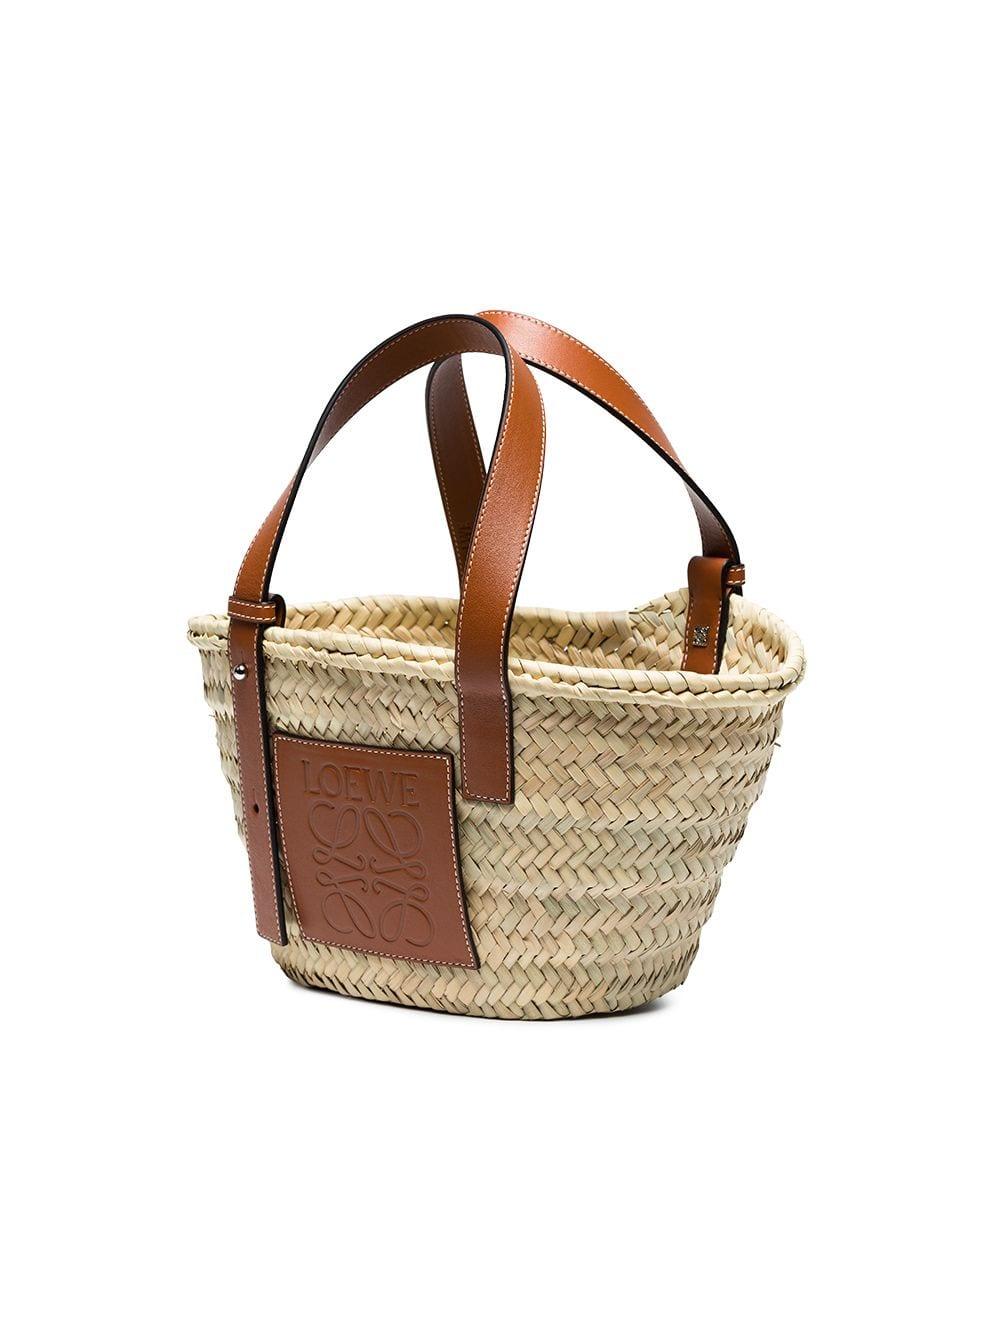 Loewe Leather Open Raffia Basket Bag in Natural/Tan (Brown) | Lyst